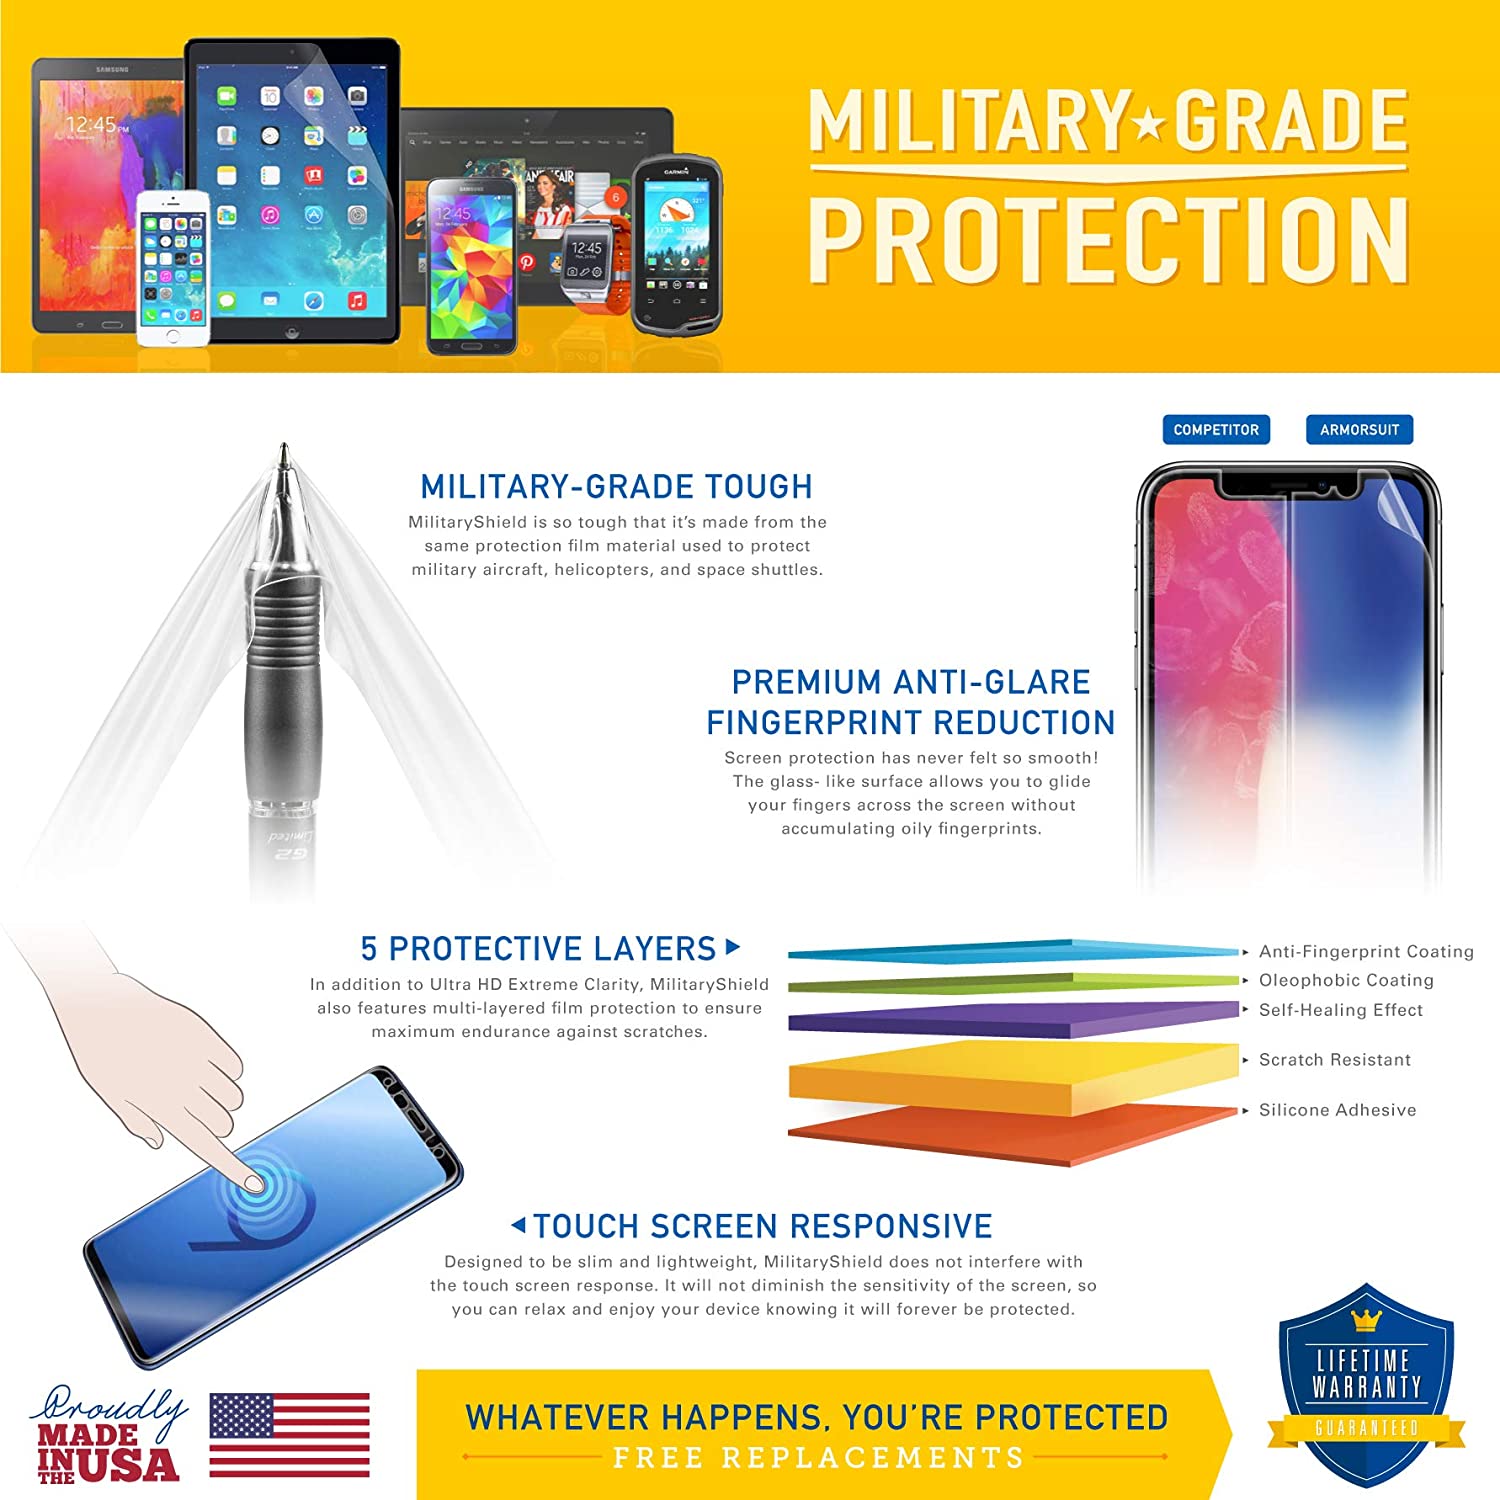 Samsung Galaxy TabPRO 12.2 Full Body Skin Protector